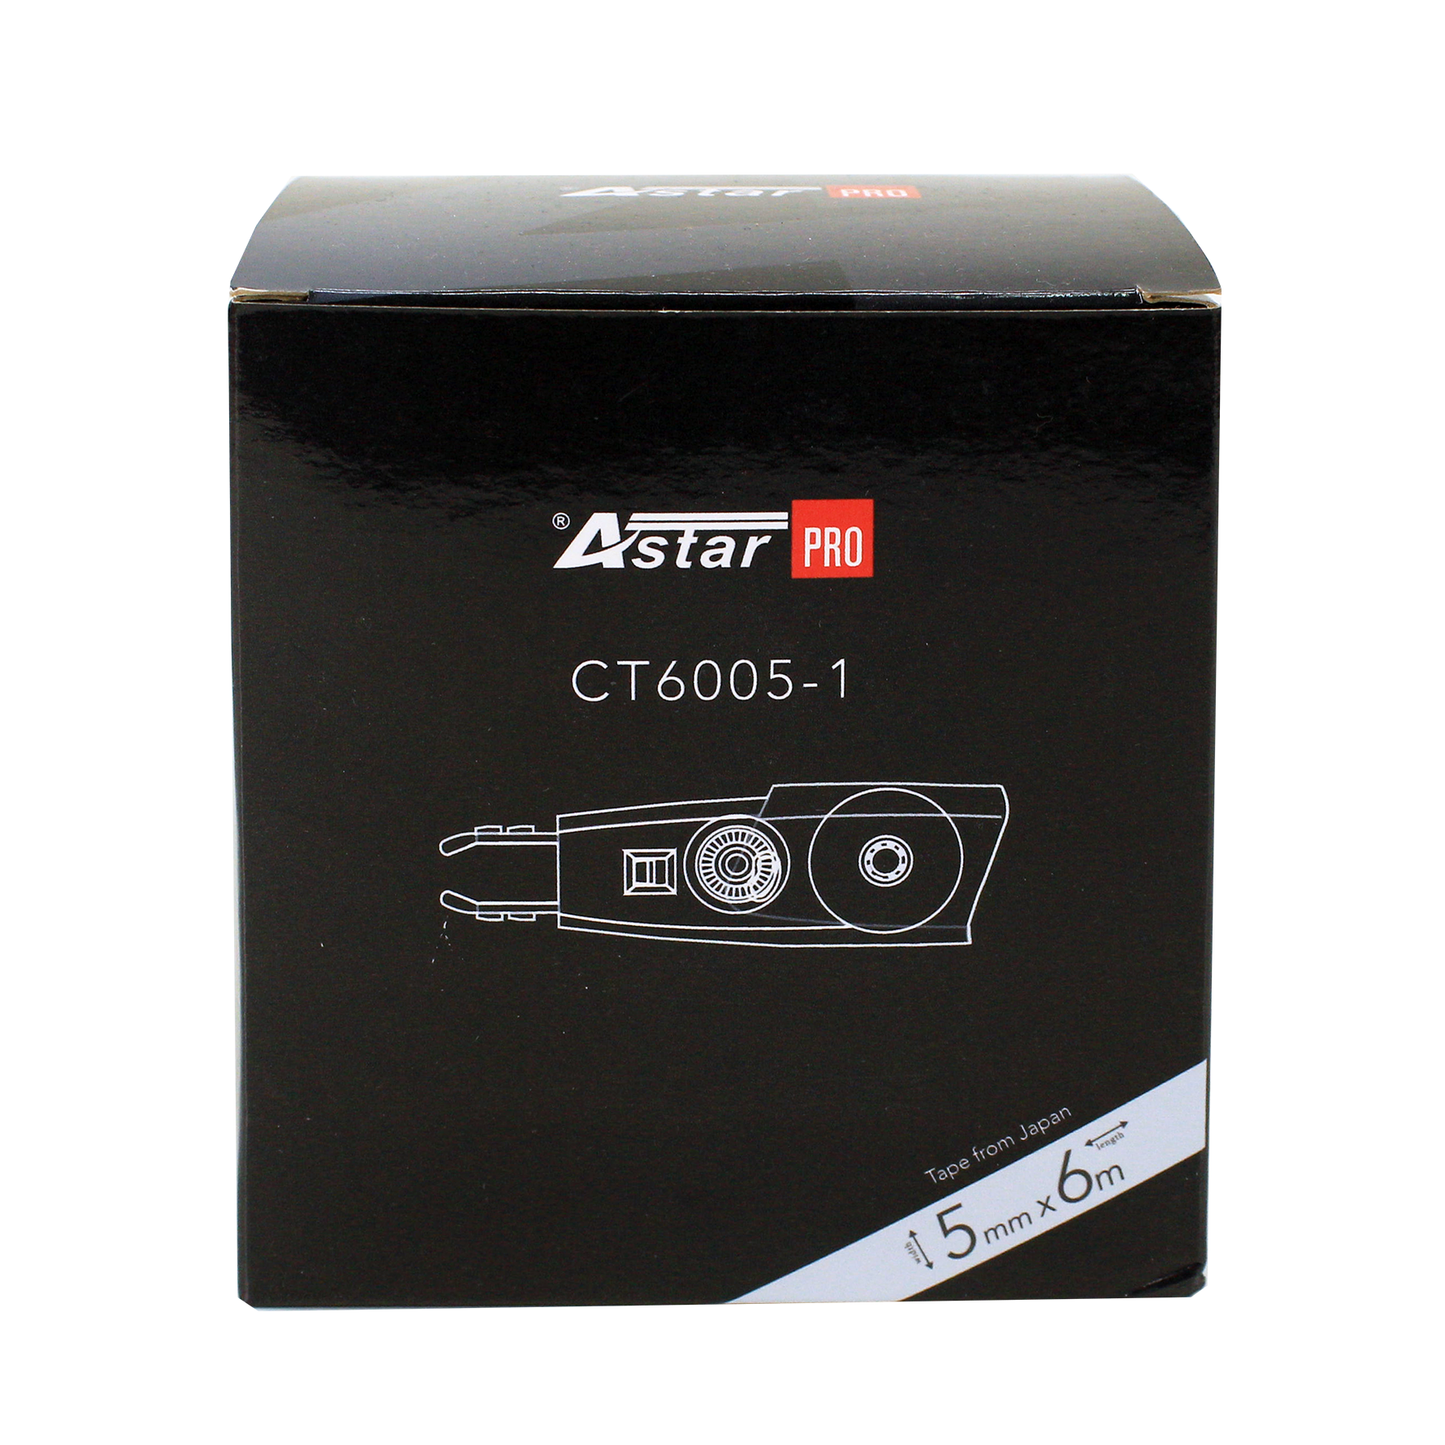 CT6005-1 - ASTAR PRO CORRECTION TAPE REFILL